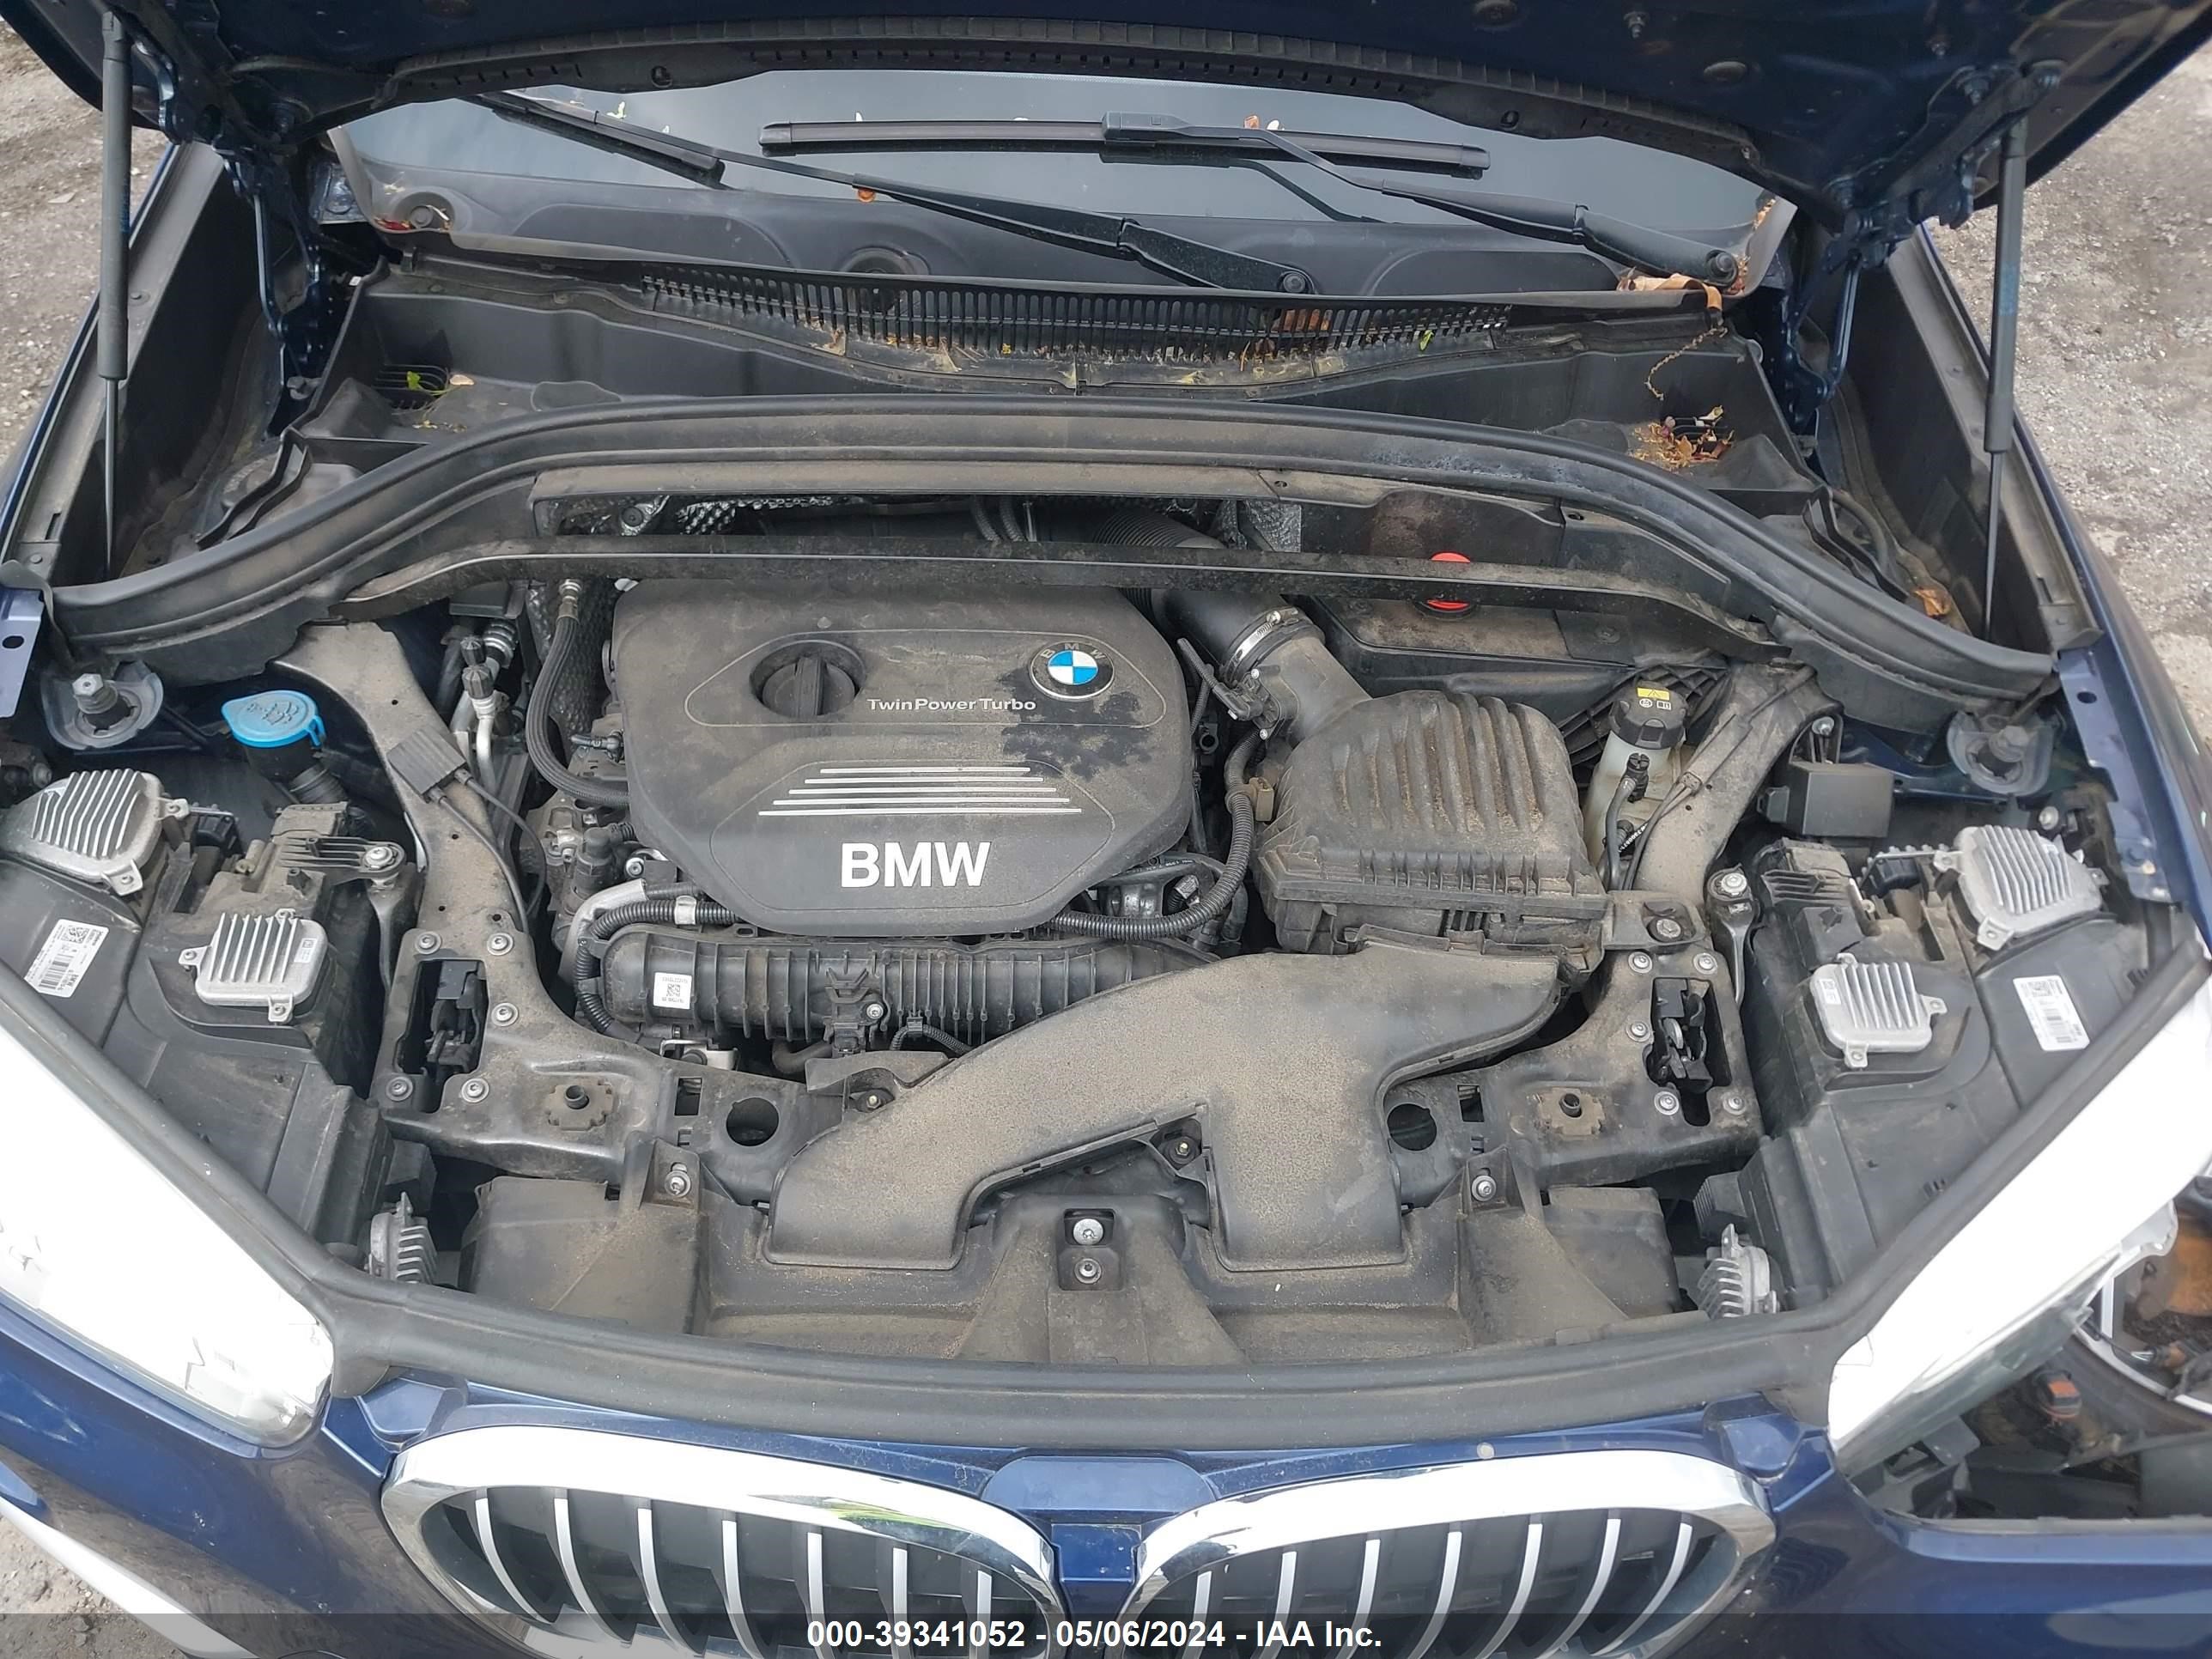 WBXHT3C32G5E48650 2016 BMW X1 xDrive28I